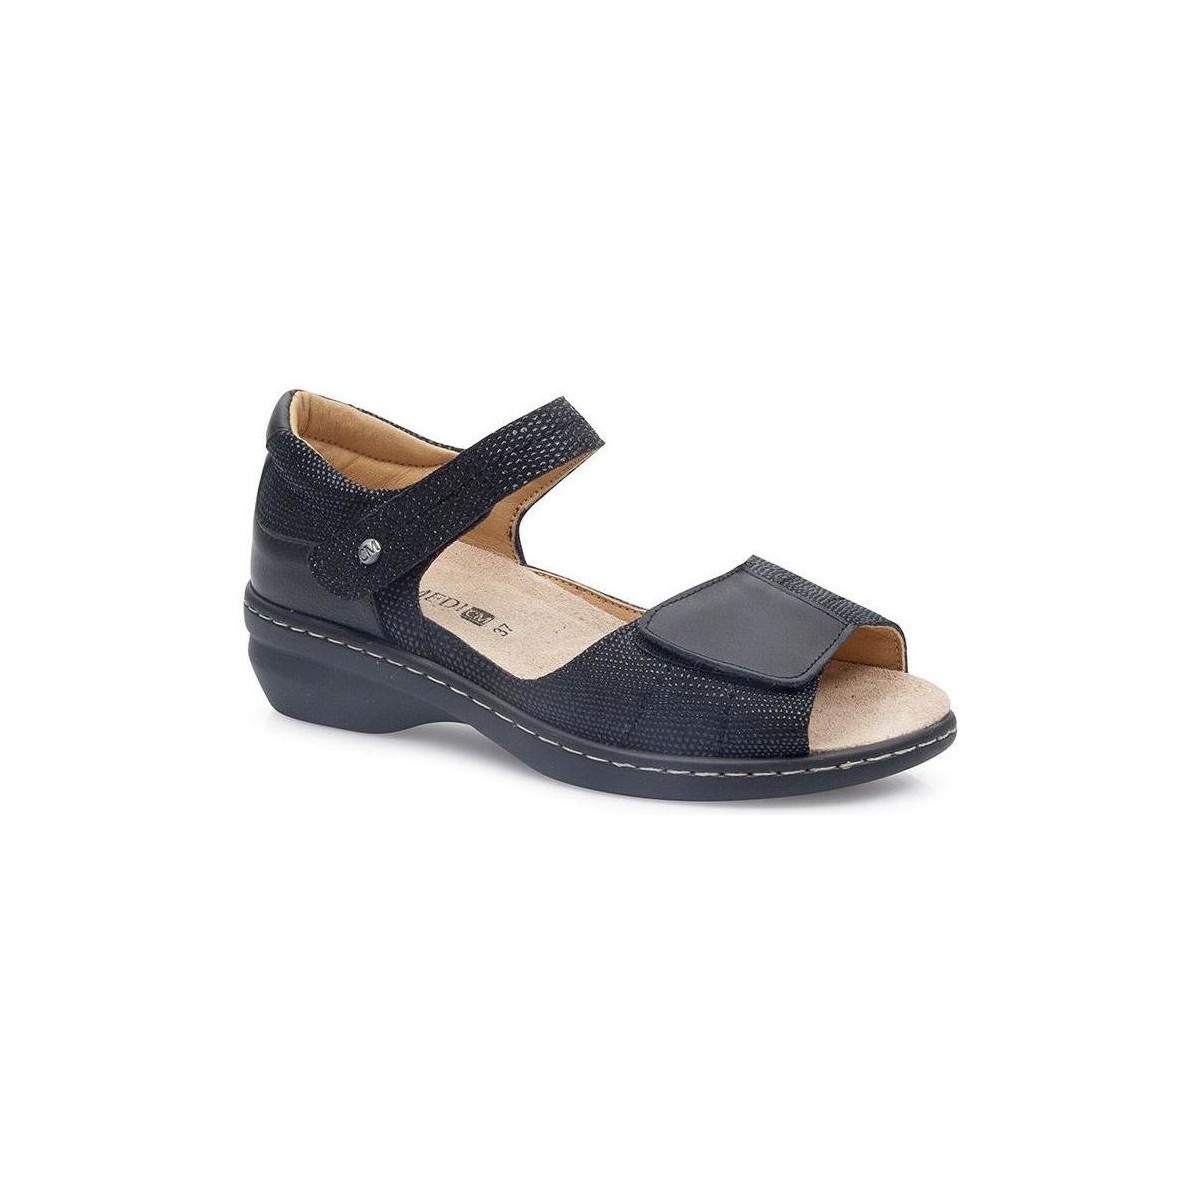 Schoenen Dames Sandalen / Open schoenen Calzamedi FASHION SANDAL Zwart